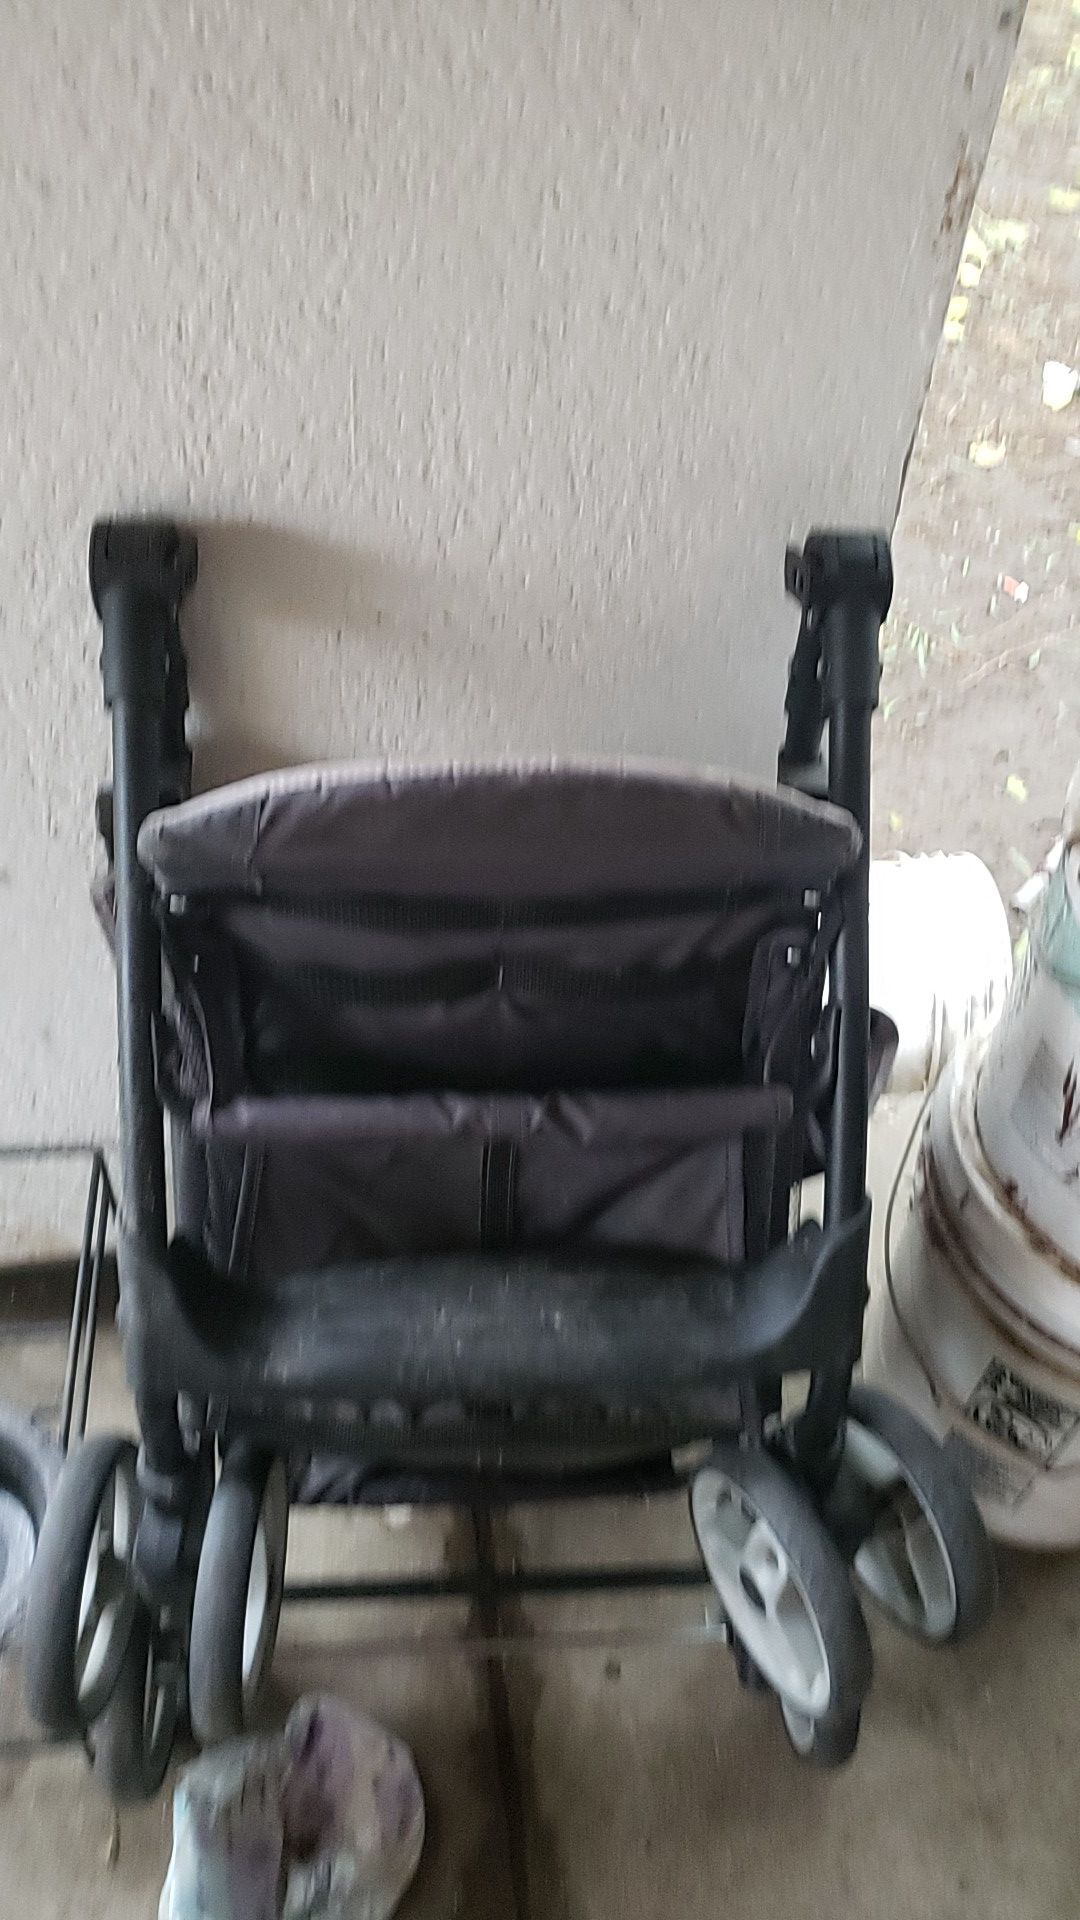 Free Used stroller